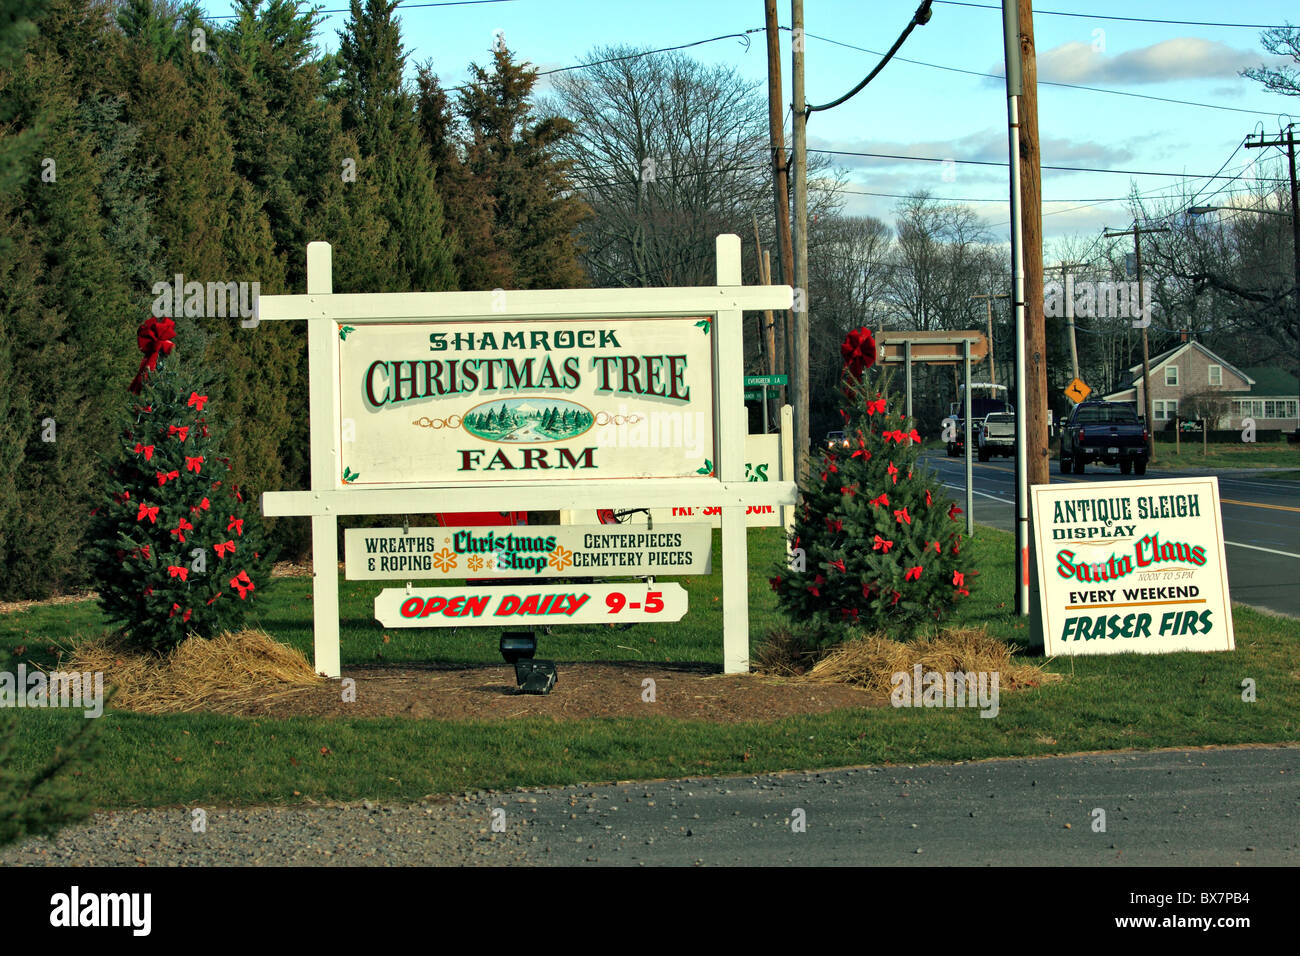 Shamrock Christmas Tree Farm, Mattituck, Long Island NY Banque D'Images